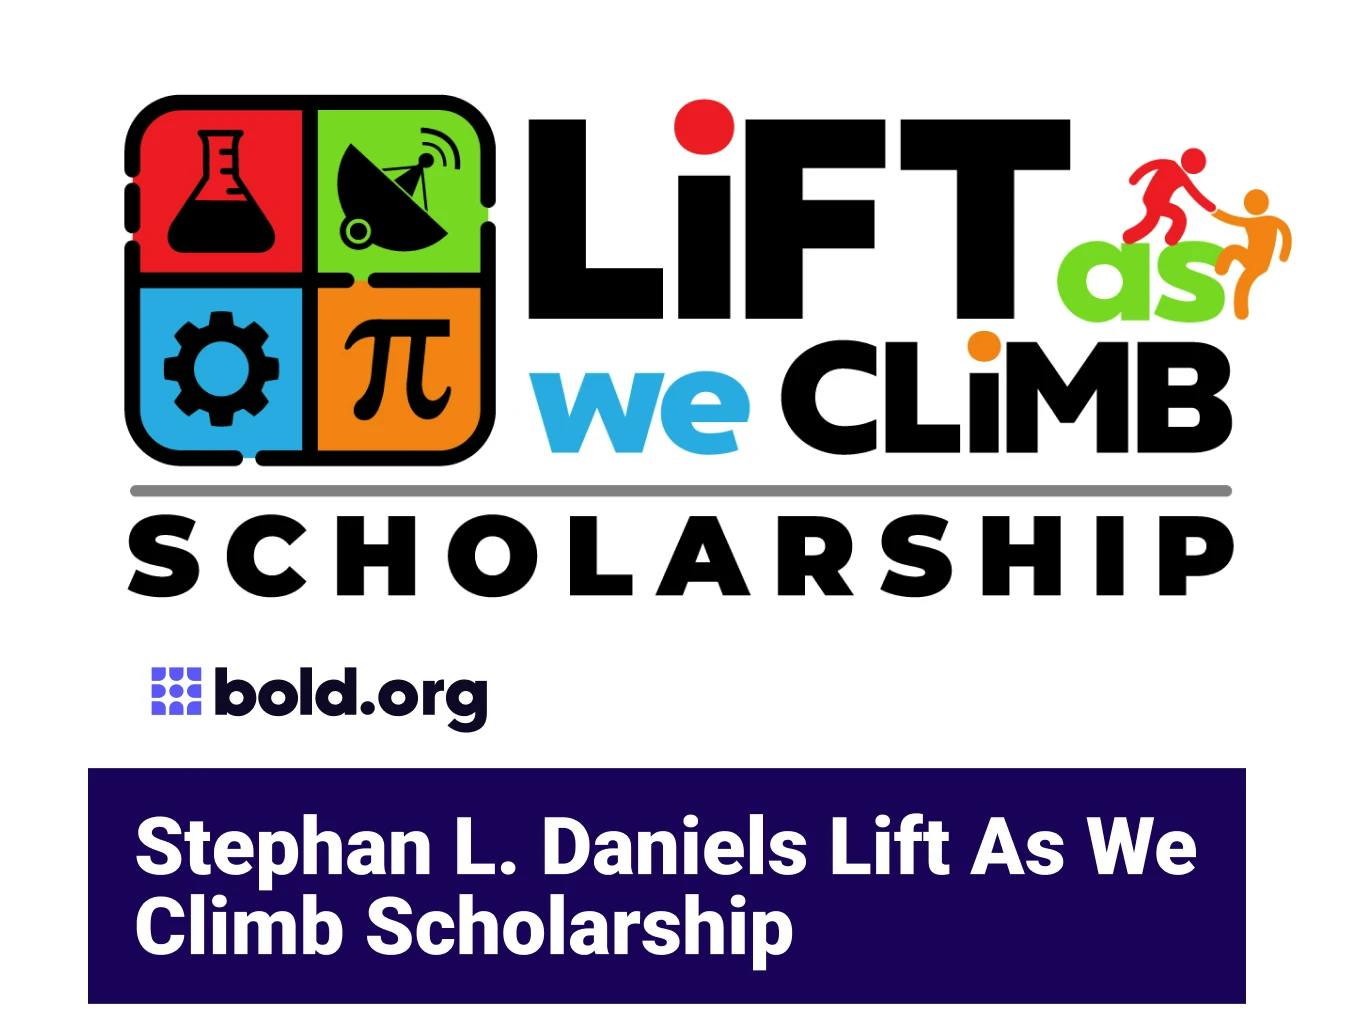 Stephan L. Daniels Lift As We Climb Scholarship